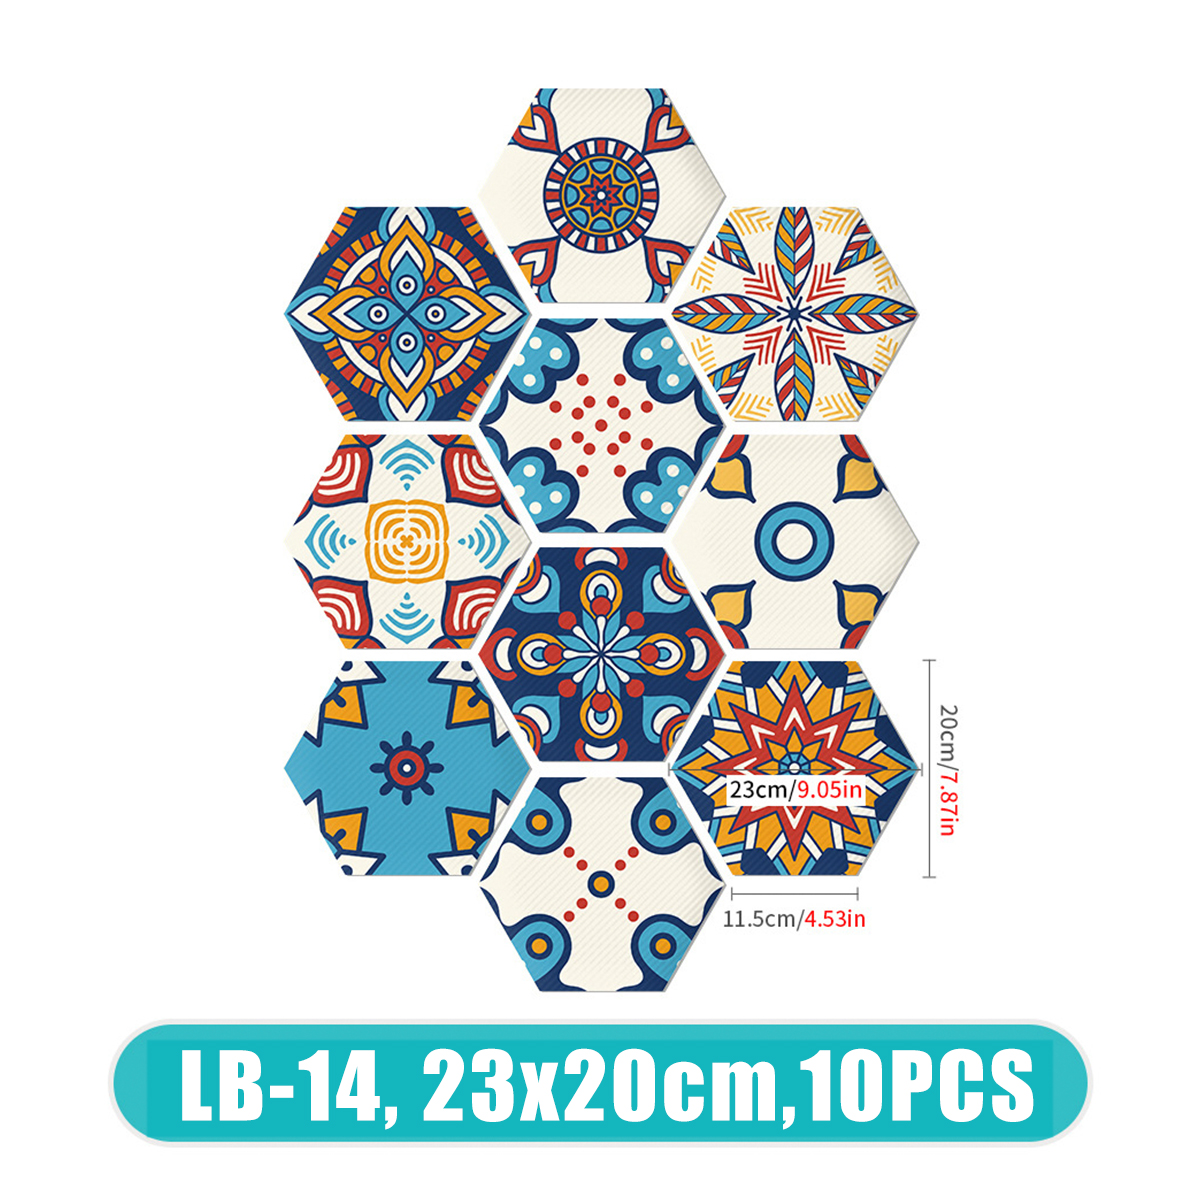 Hexagonal-Floor-Stickers-Special-Shaped-Tile-Stickers-Self-Adhesive-Bathroom-Toilet-Waterproof-And-W-1859007-12